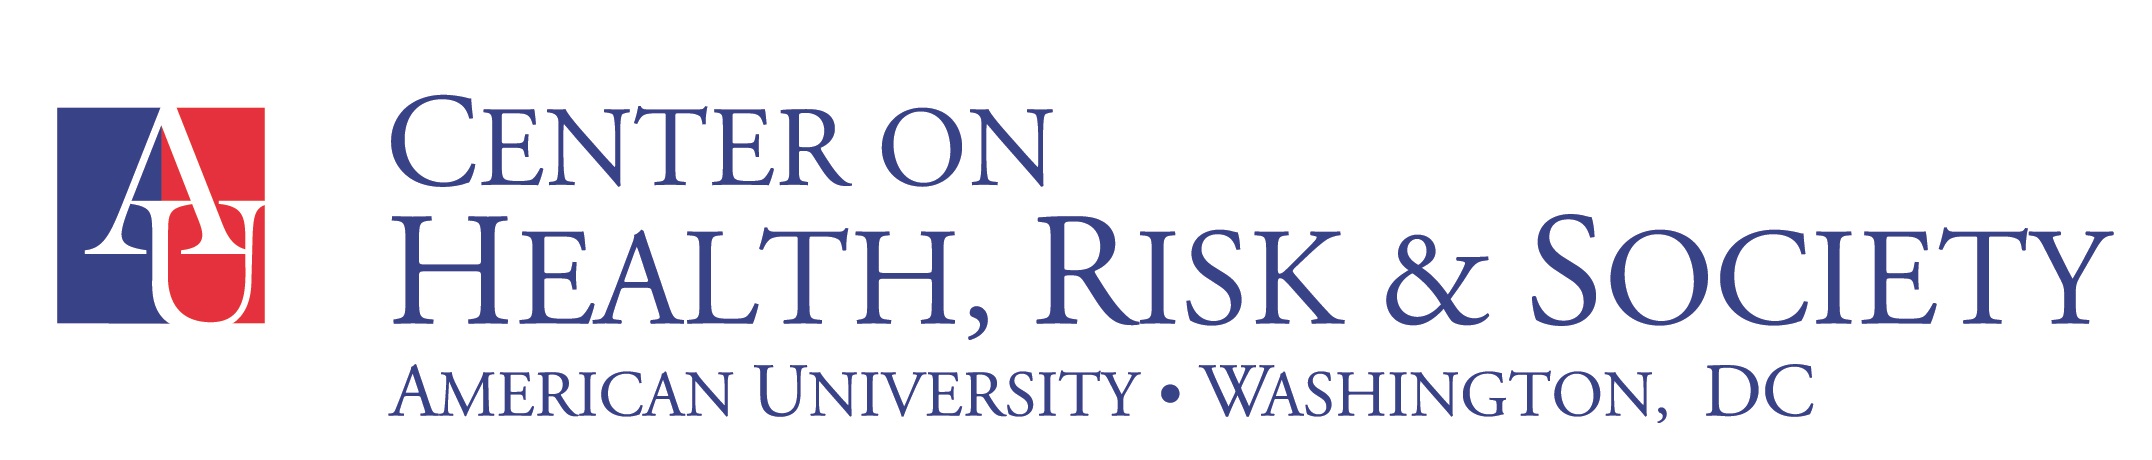 Center on Health, Risk & Society logo